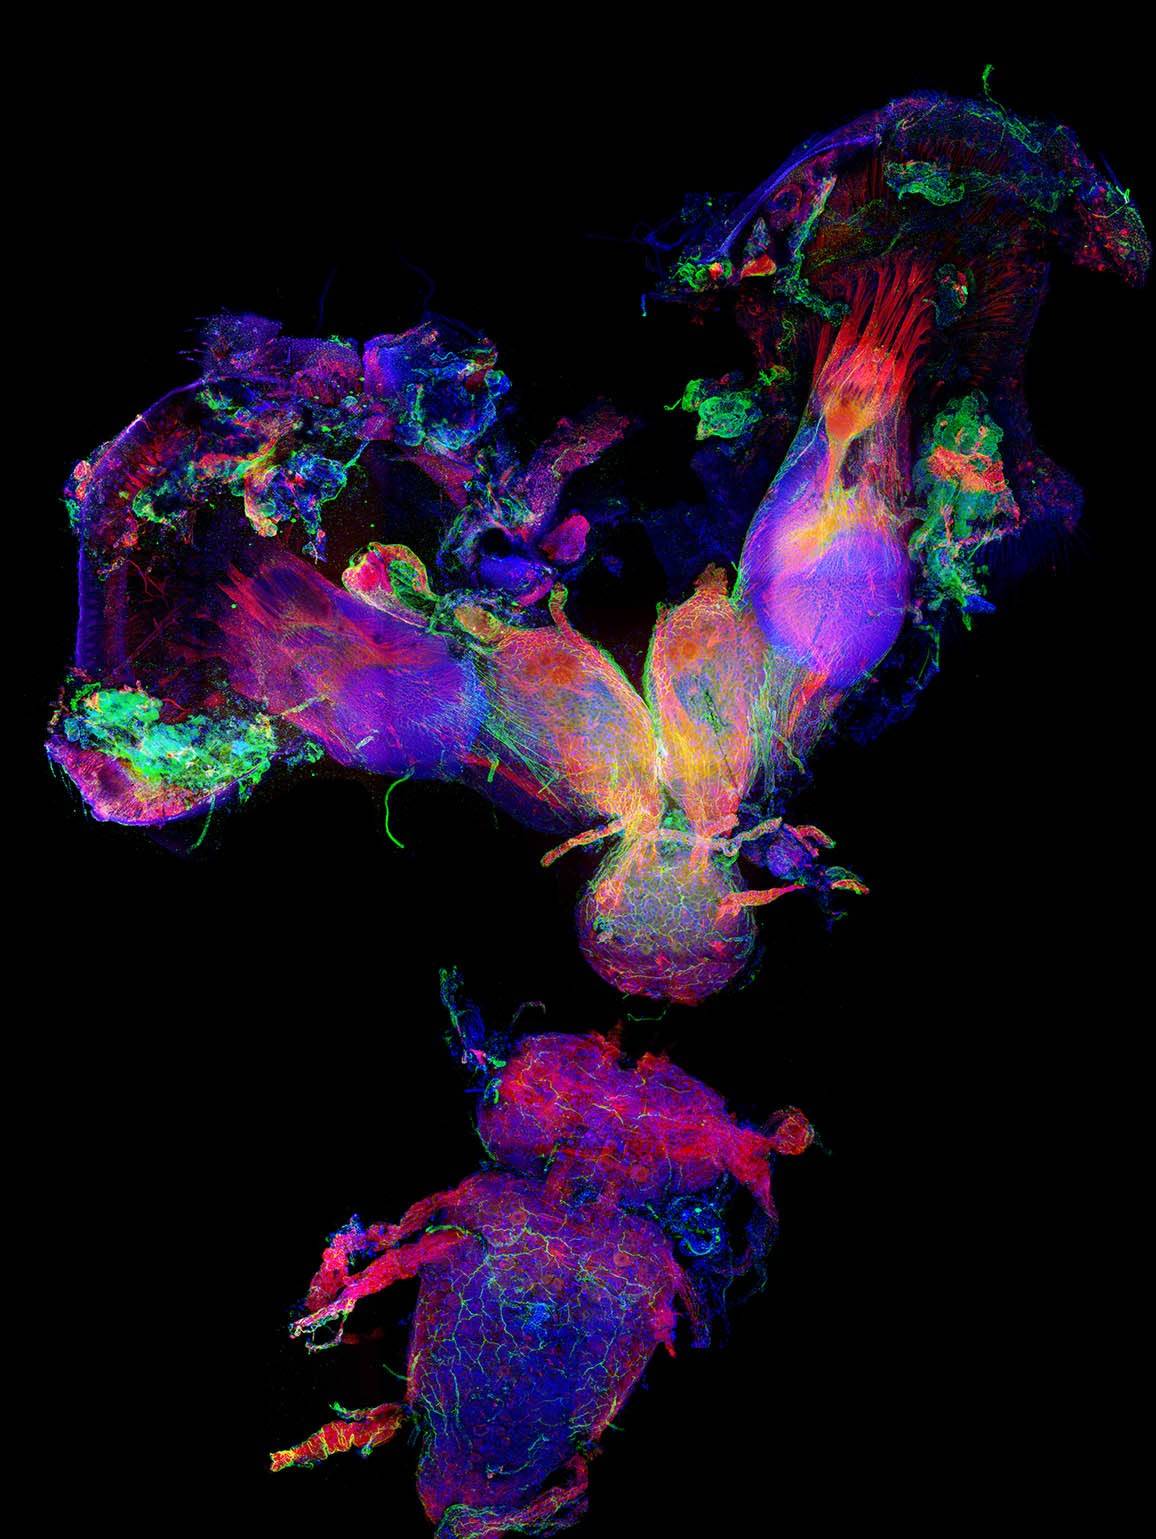 Sistema nervioso completo de una pupa tardía del escarabajo estercolero 'Onthophagus sagittarius'. / E. Zattara